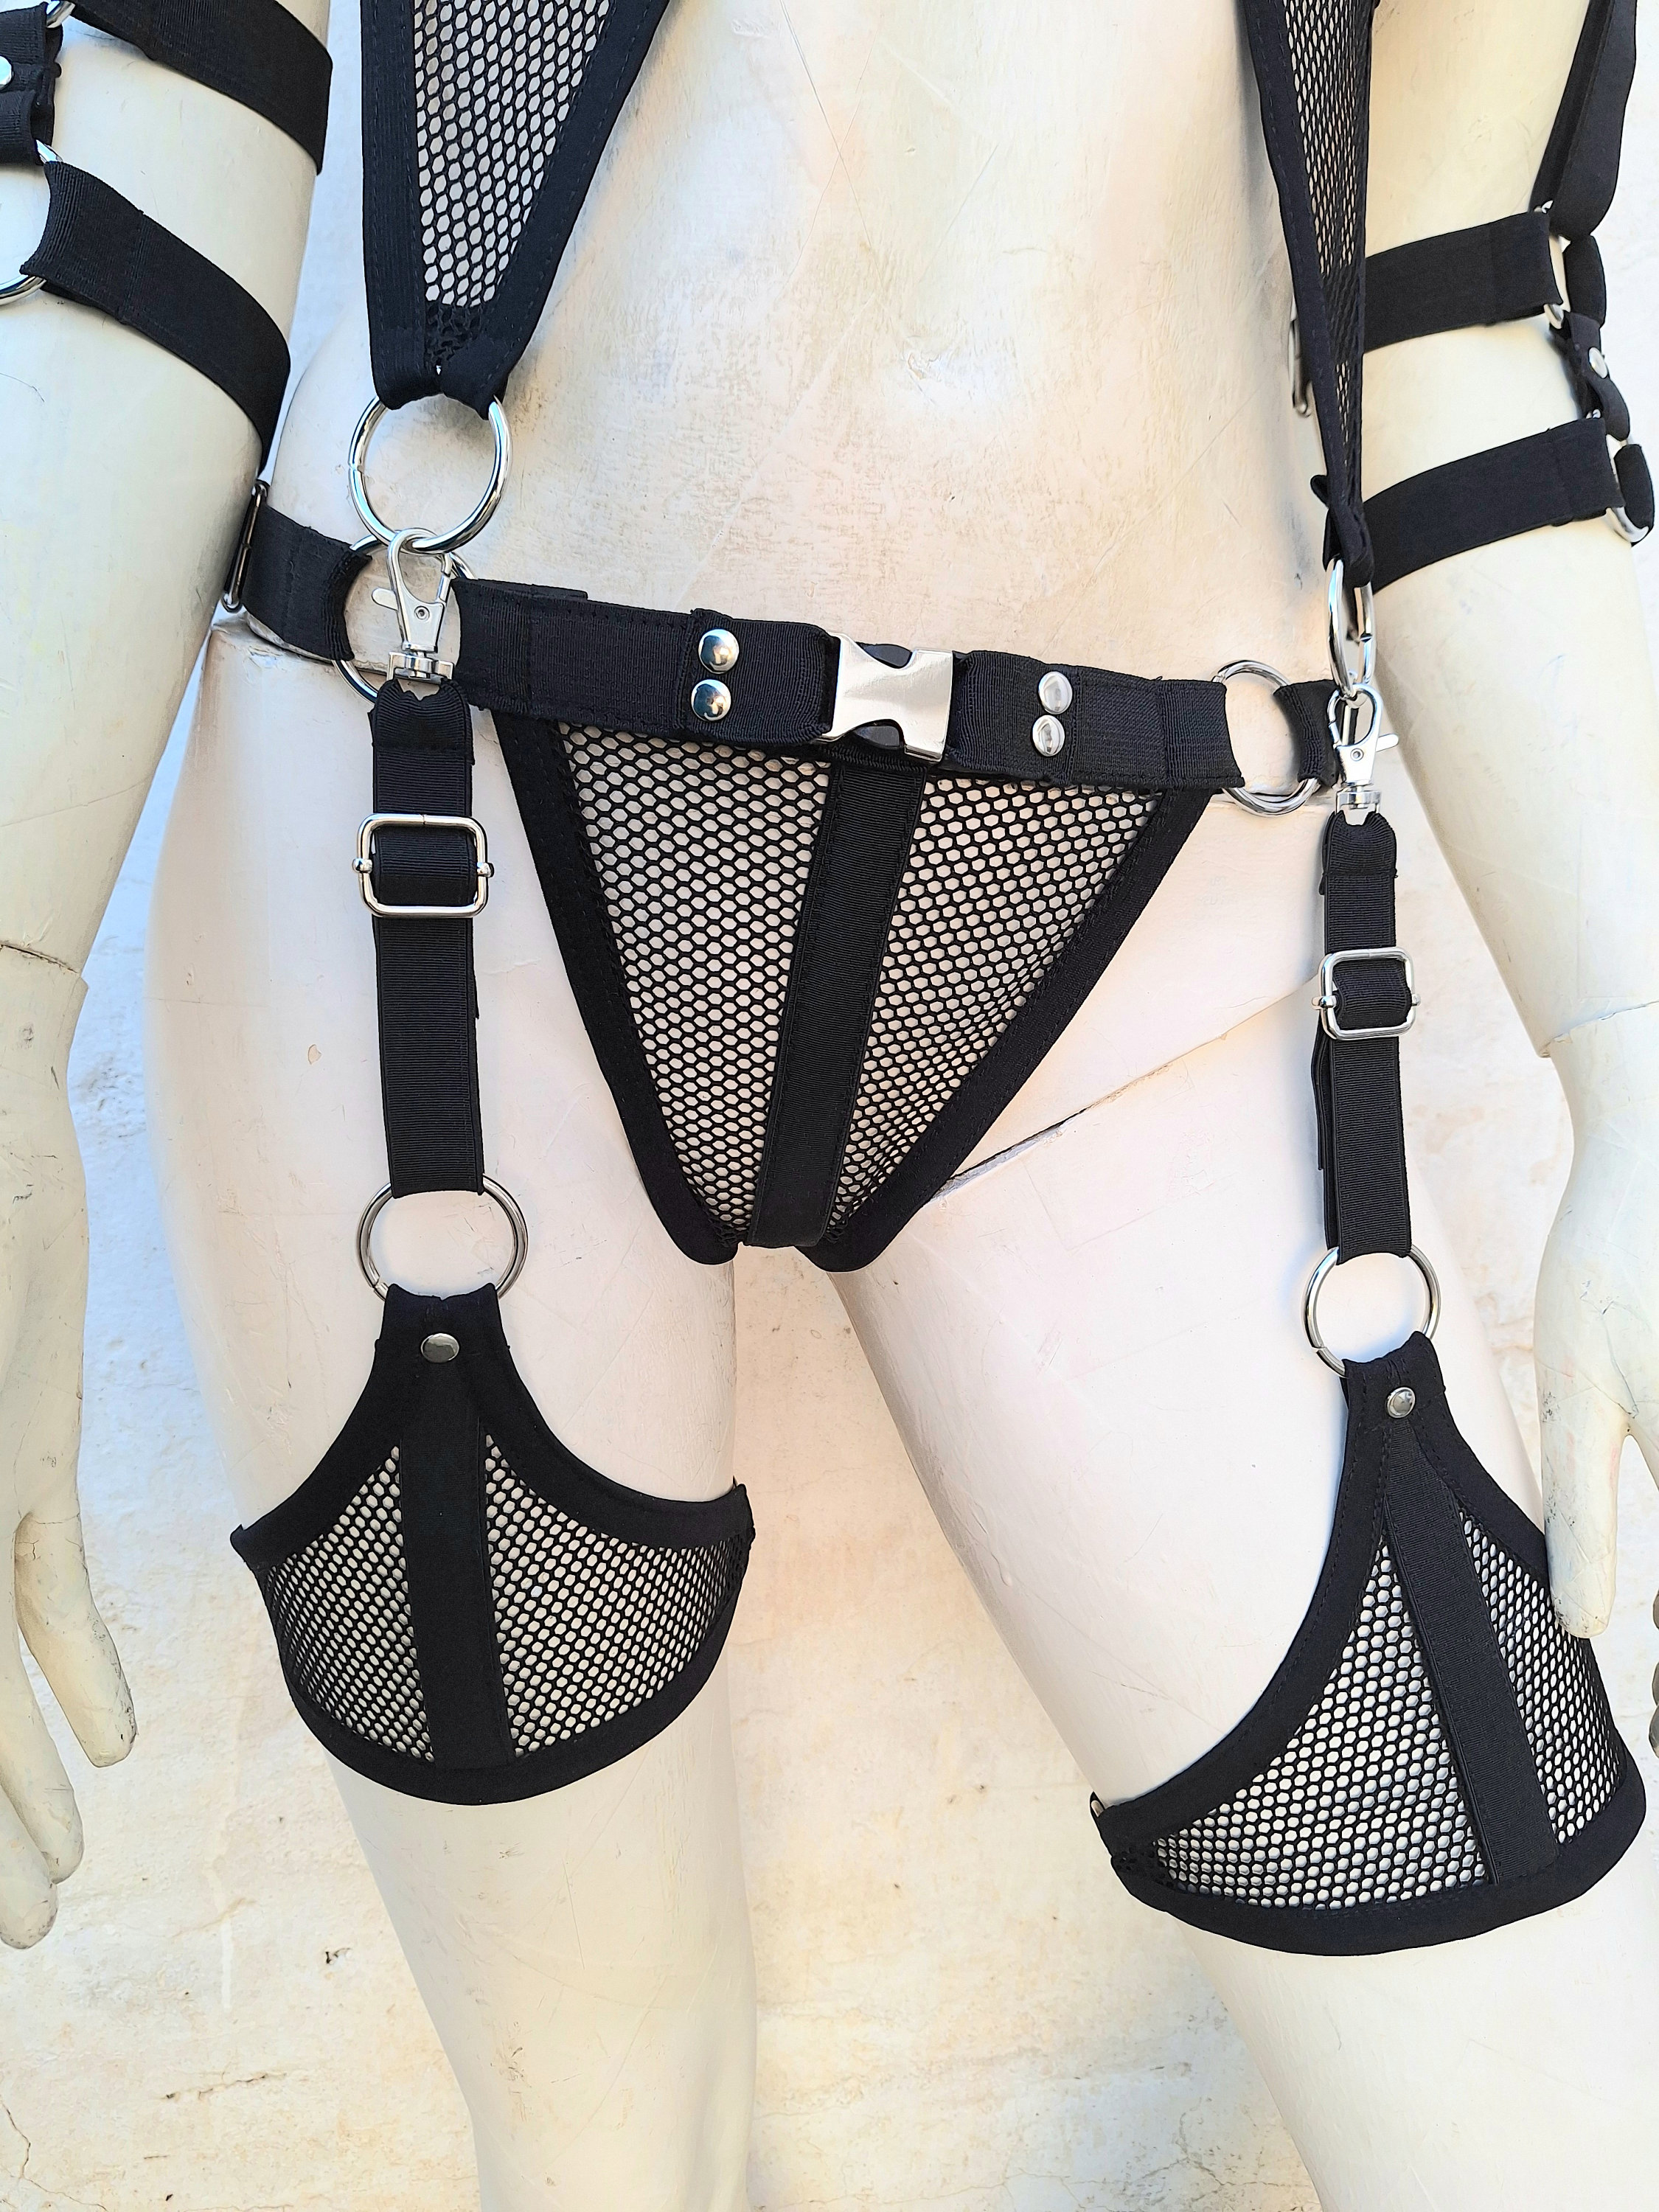 mesh rave outfit black mesh gothic festival wear elastic harness lingerie set photo